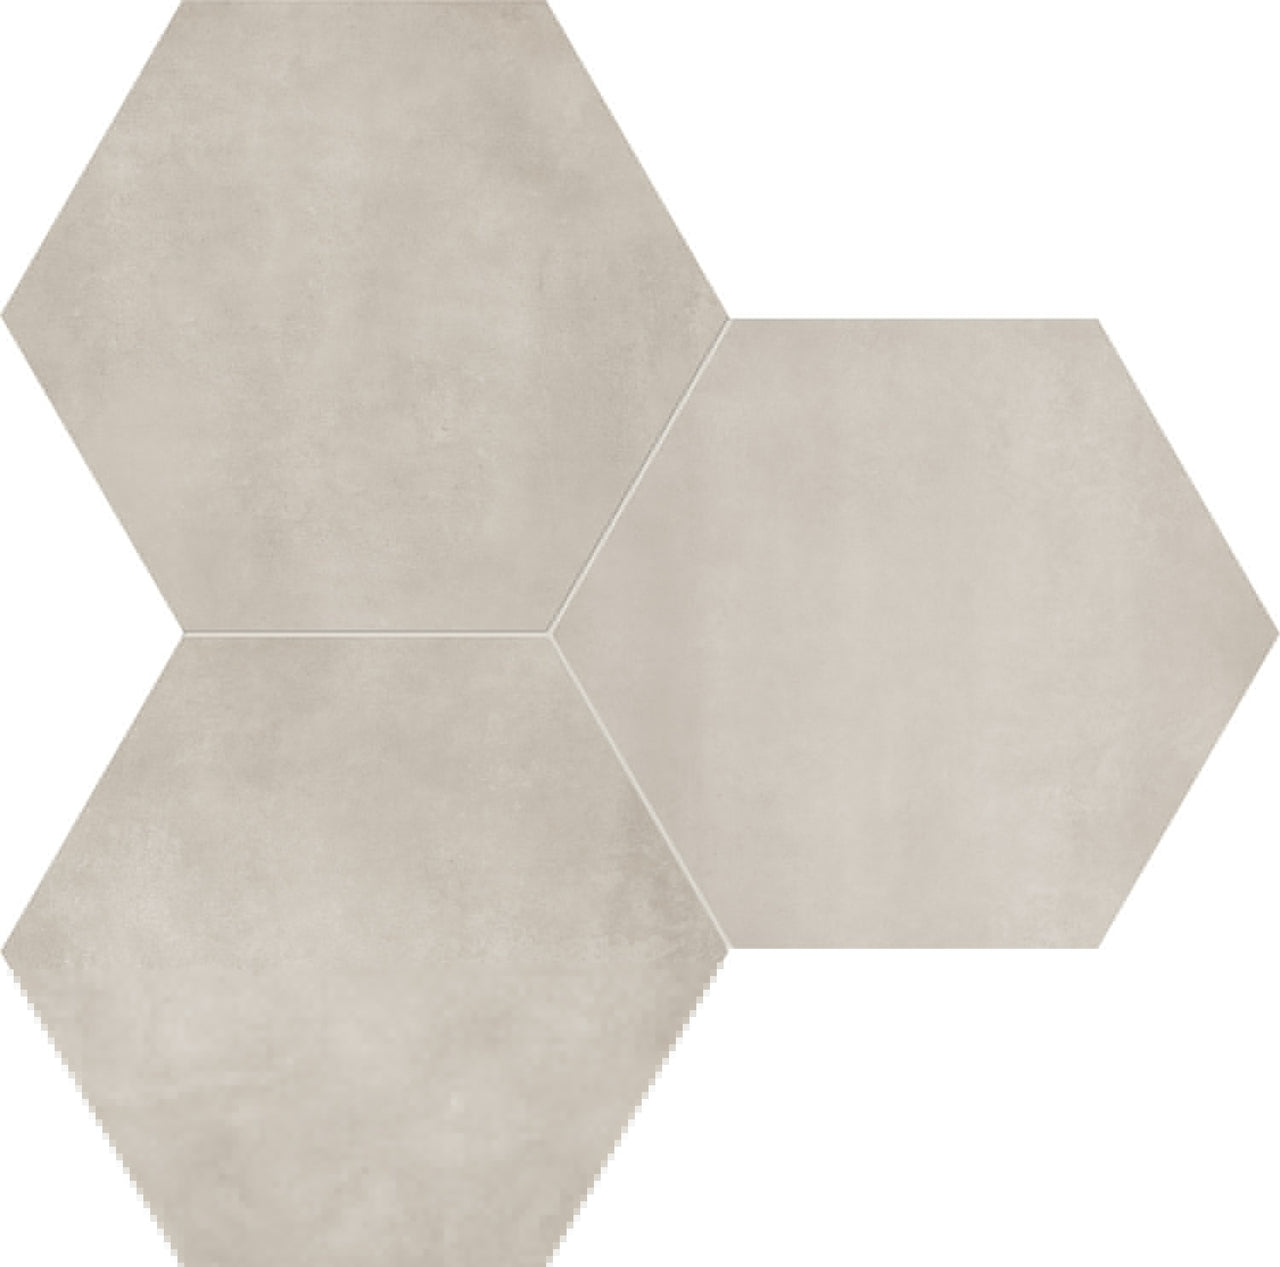 7 In Hexagon Form Sand Matte Pressed Glazed Porcelain